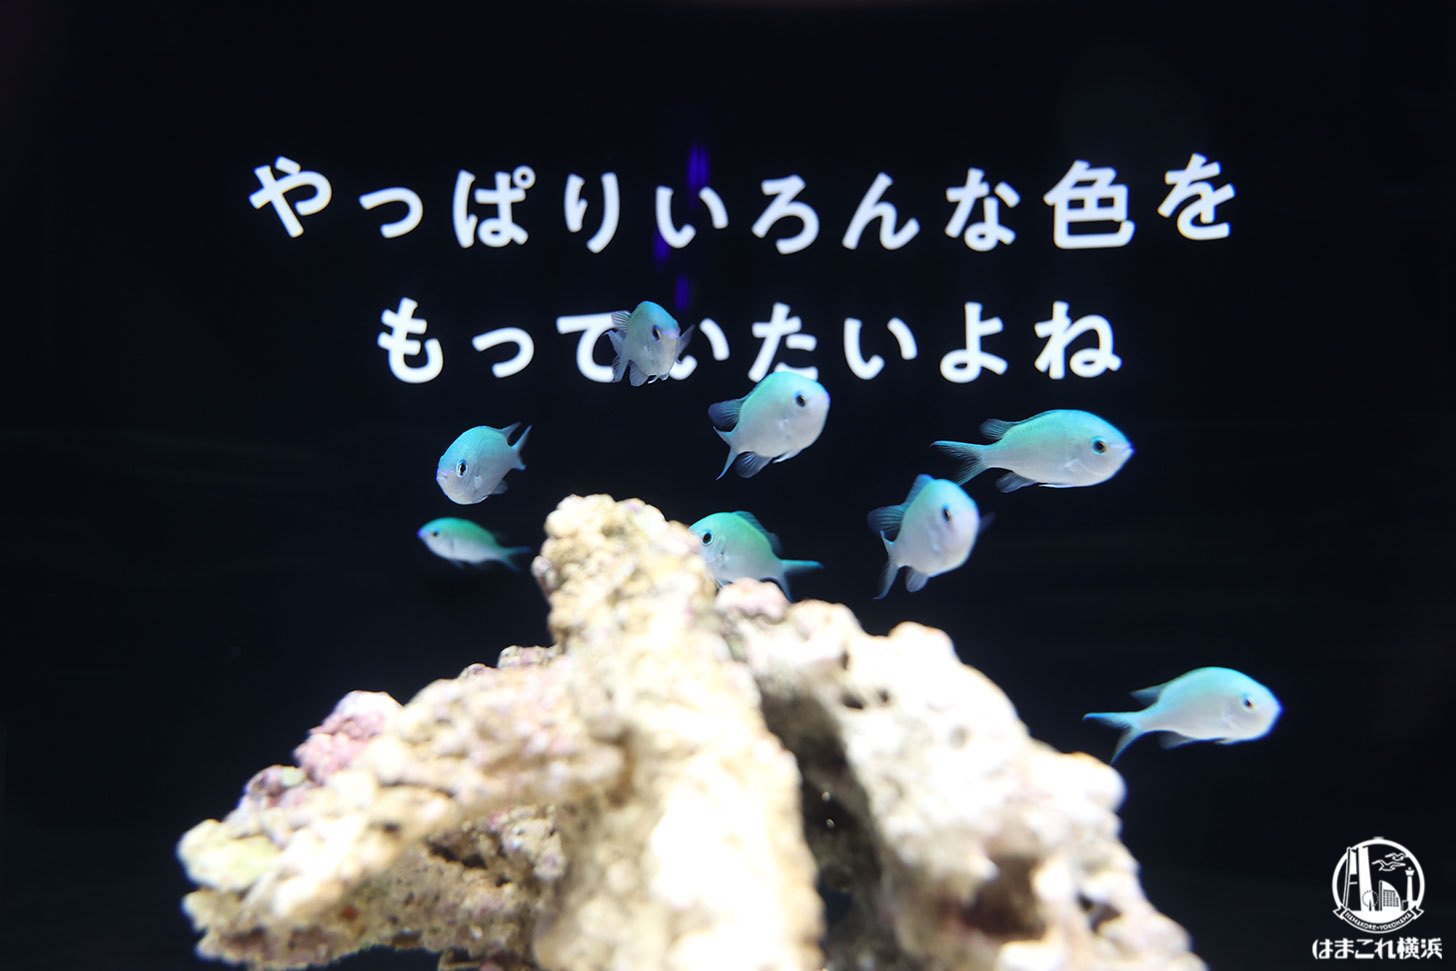 Fortune aquarium yokohama chinatown report 23